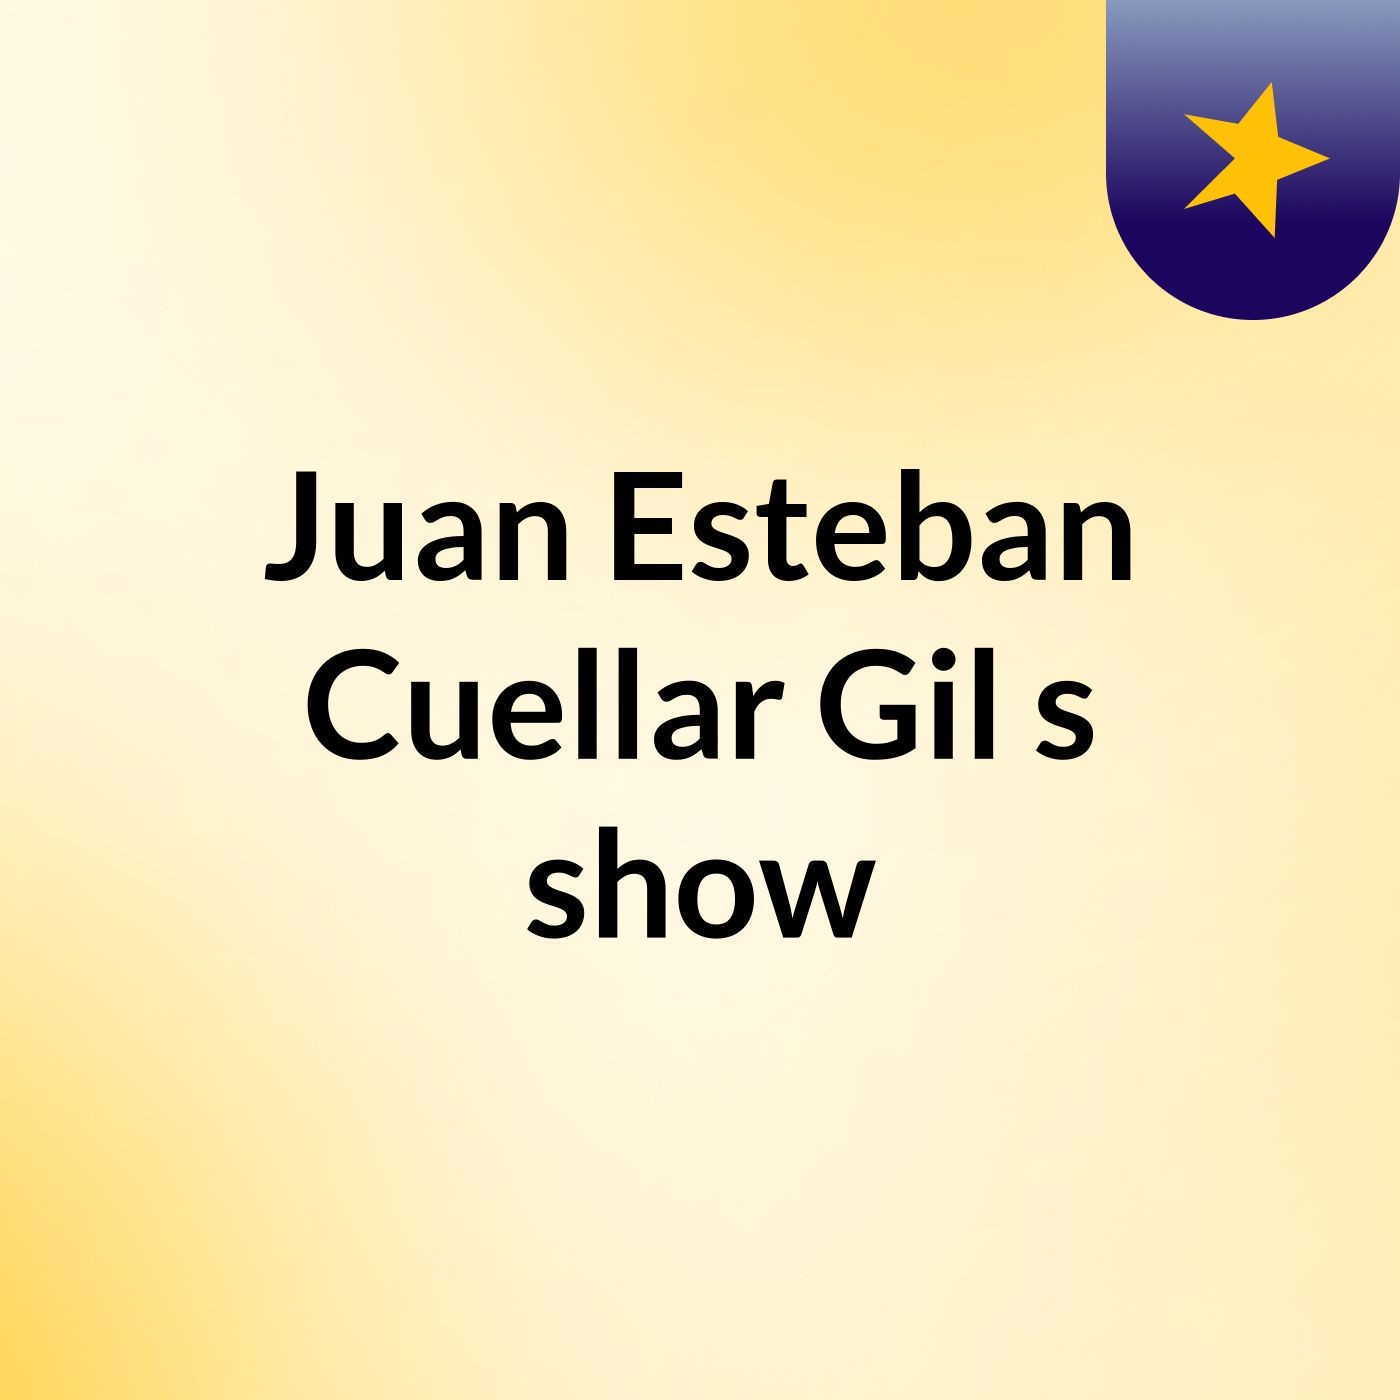 Juan Esteban Cuellar Gil's show